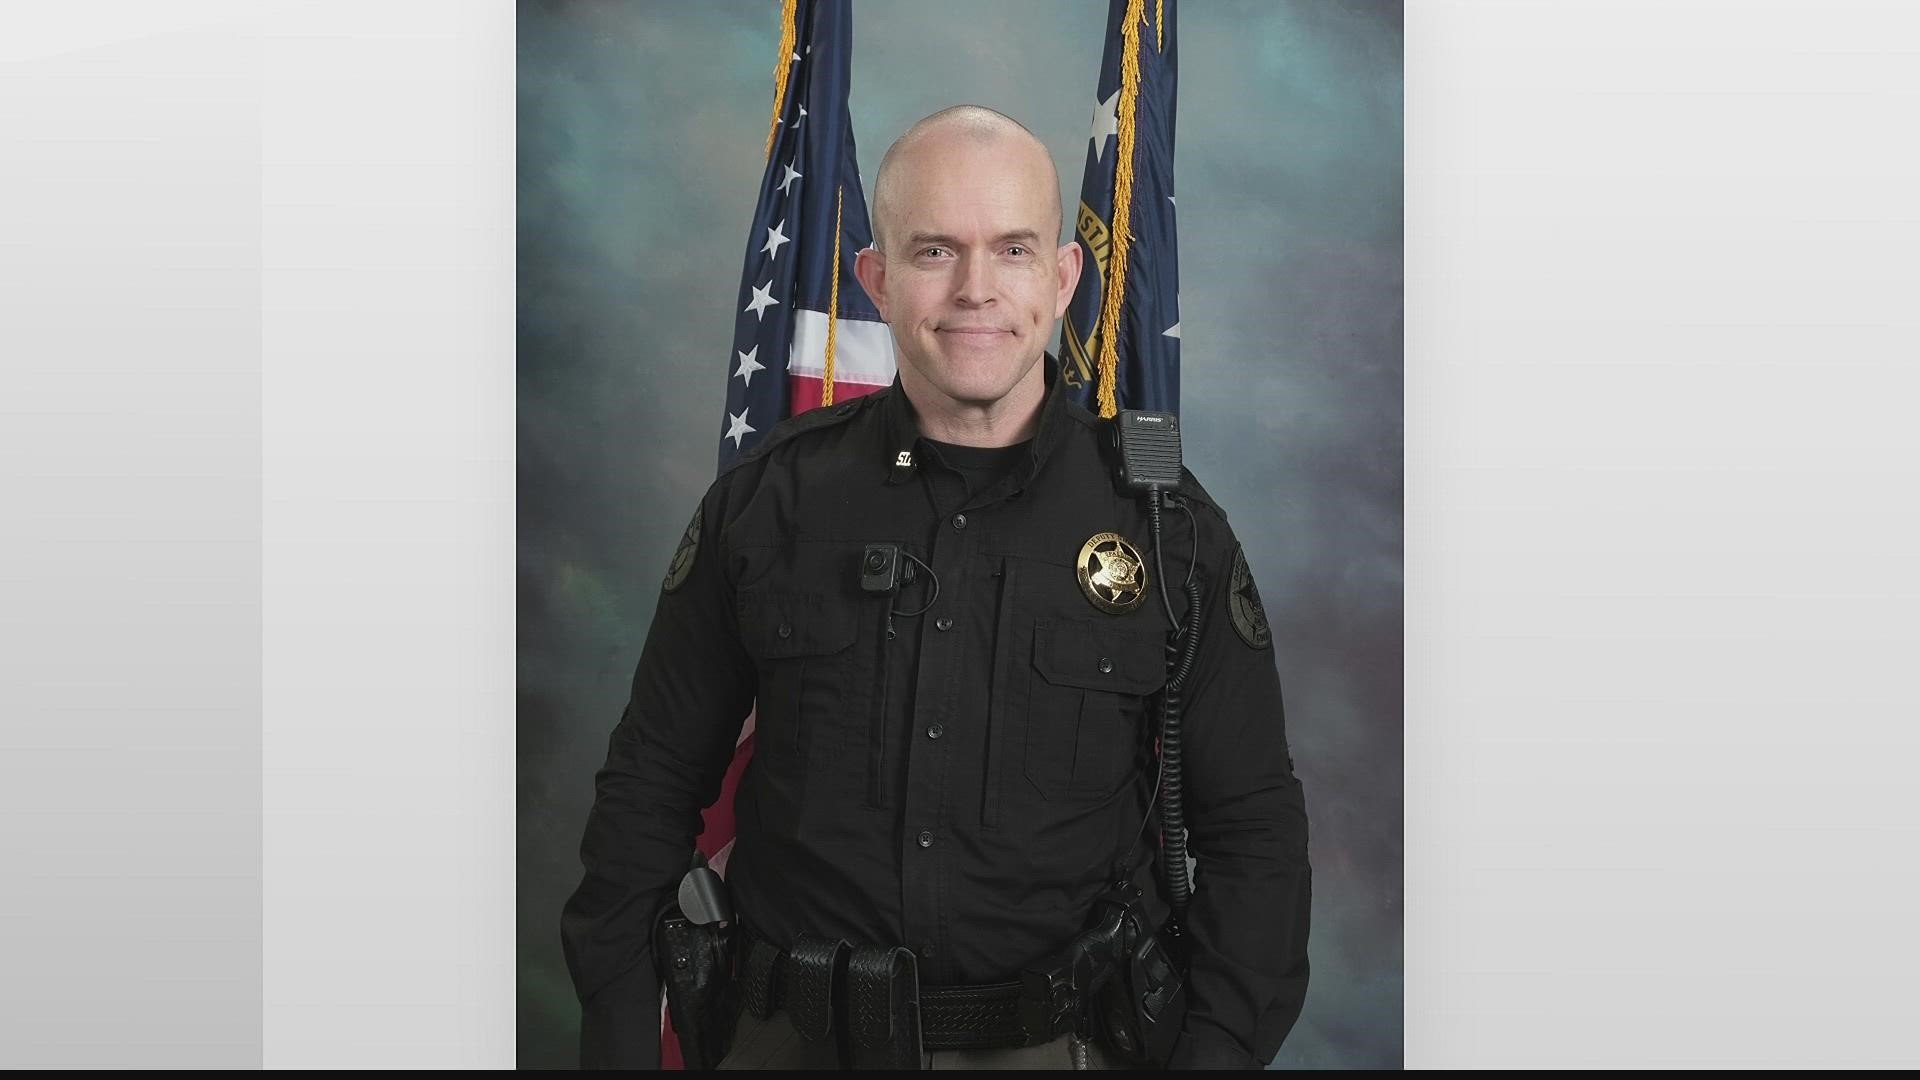 Deputy Jamie Reynolds was killed when a pine tree fell crushing his patrol car.